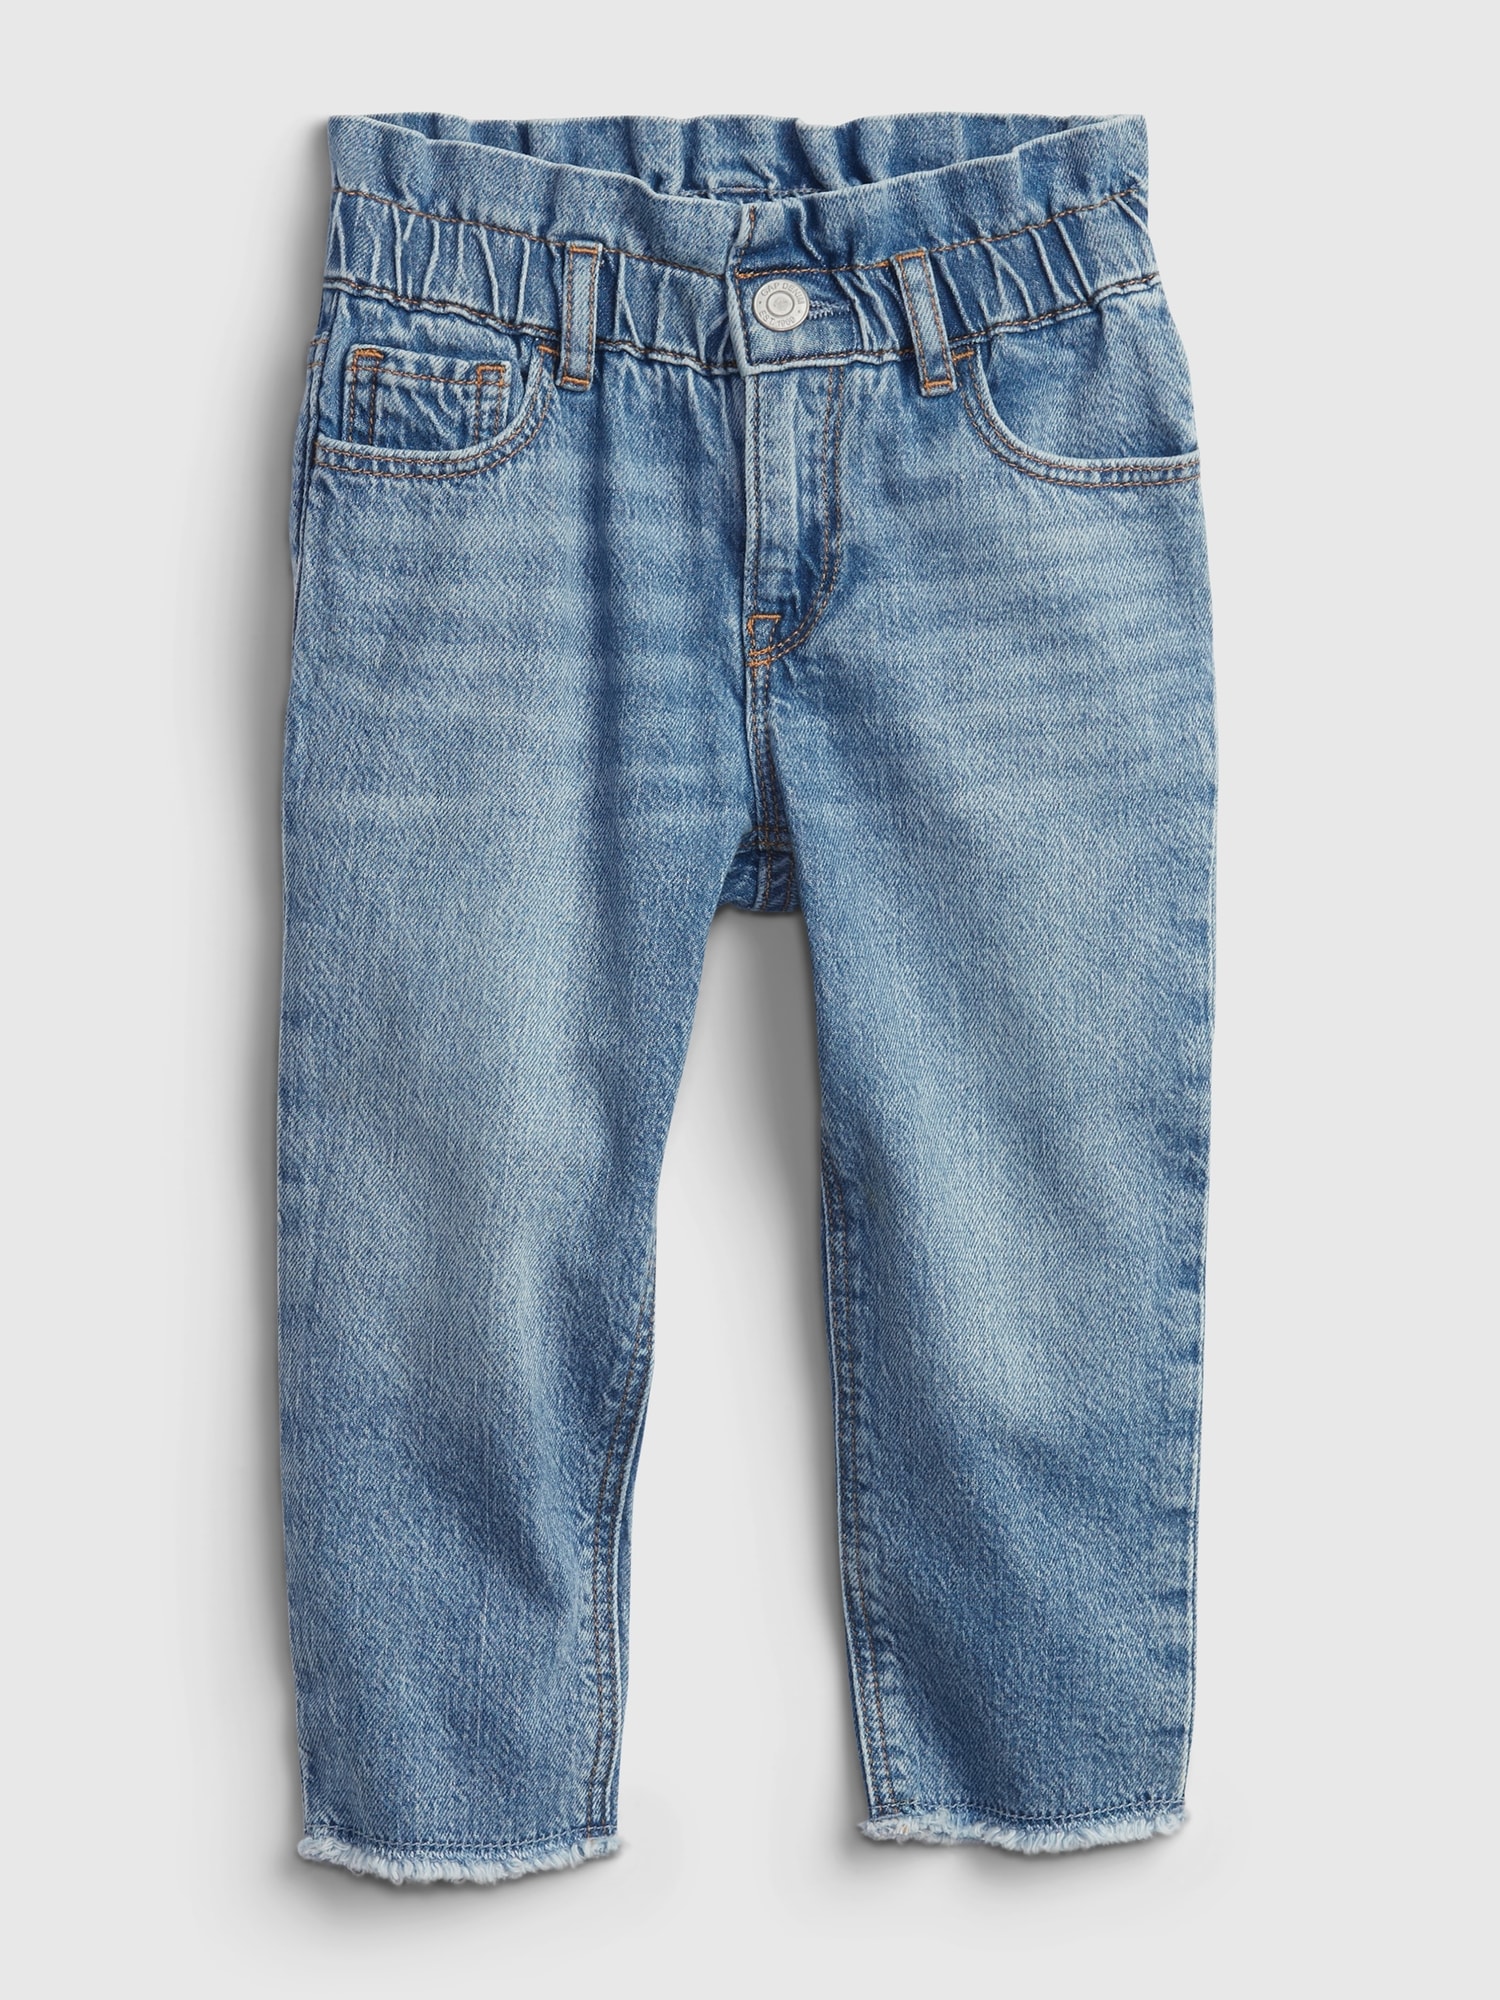 Just Love Women's Denim Jeggings with Pockets - Comfortable Stretch Jeans  Leggings (Denim, X-Large) - Walmart.com